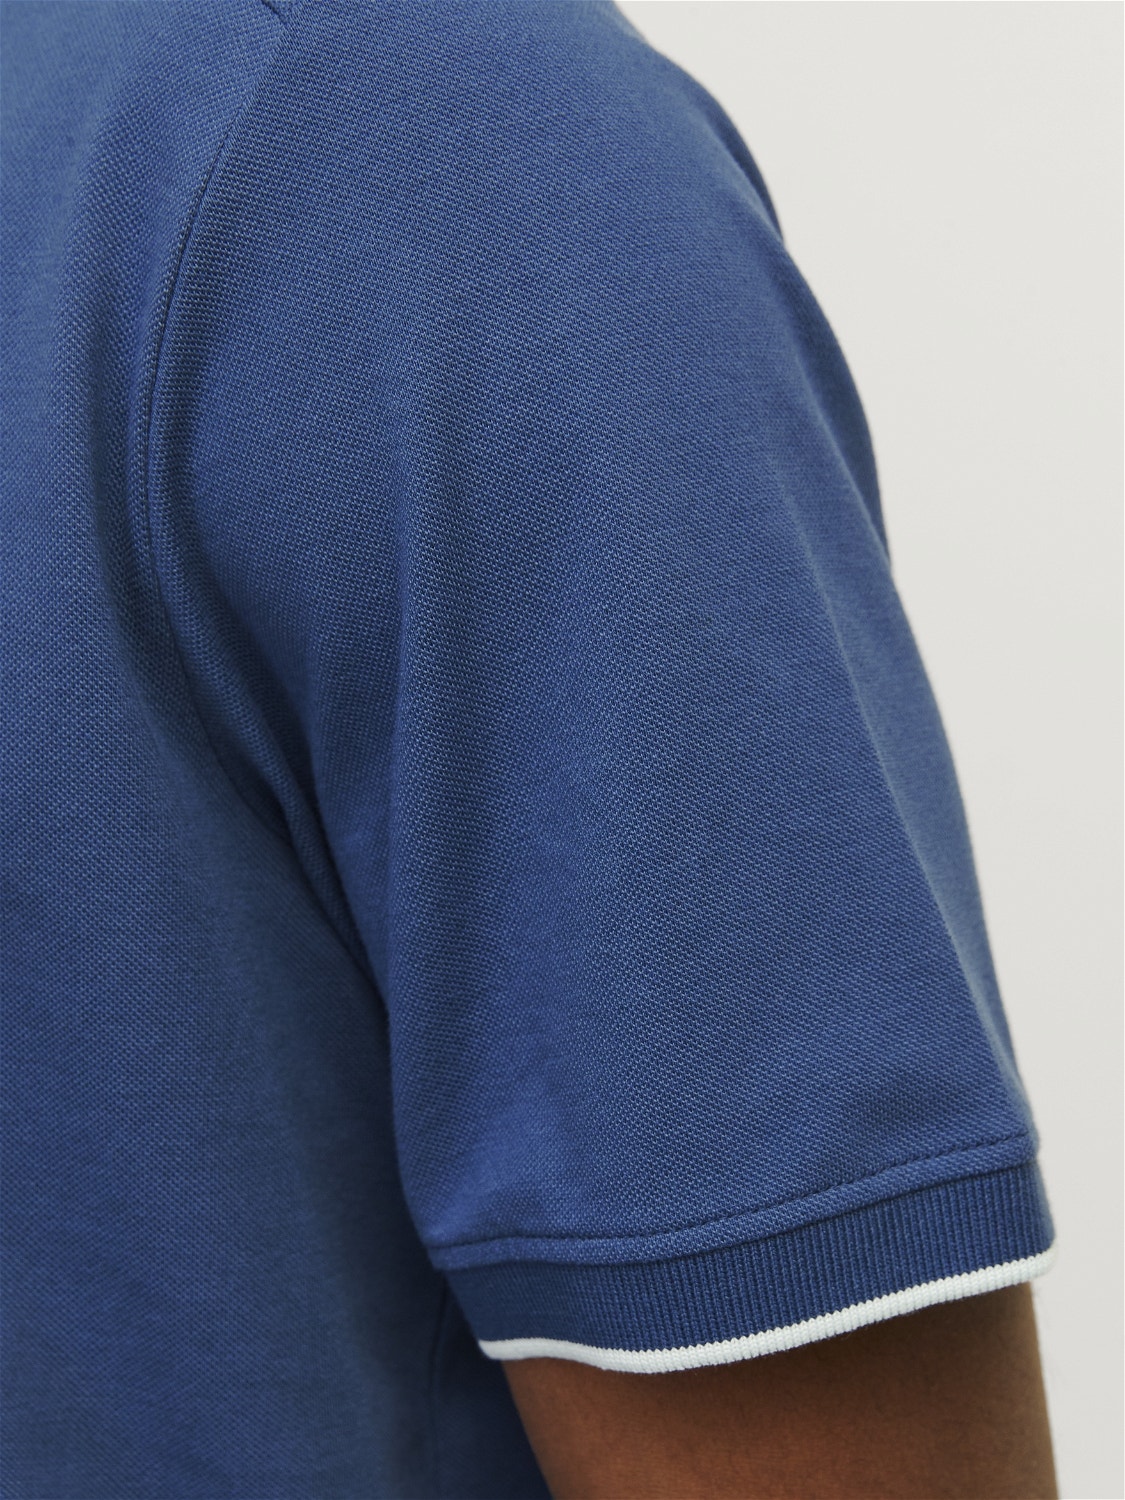 Jack & Jones Plain Polo T-shirt -Ensign Blue - 12252395